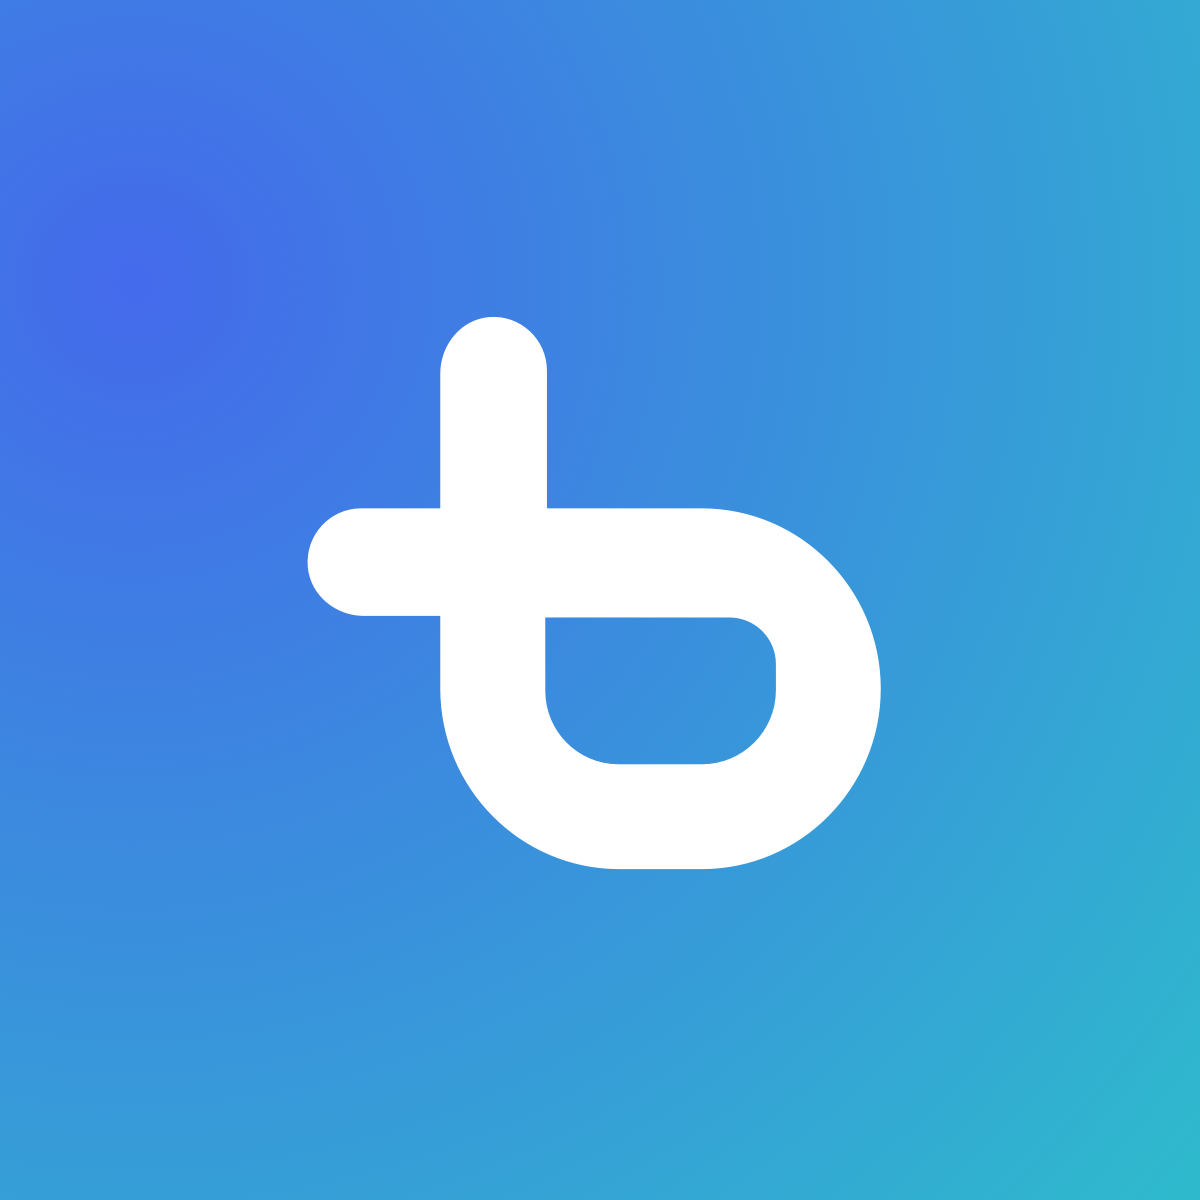 Bigblue ‑ All in one logistics Shopify App